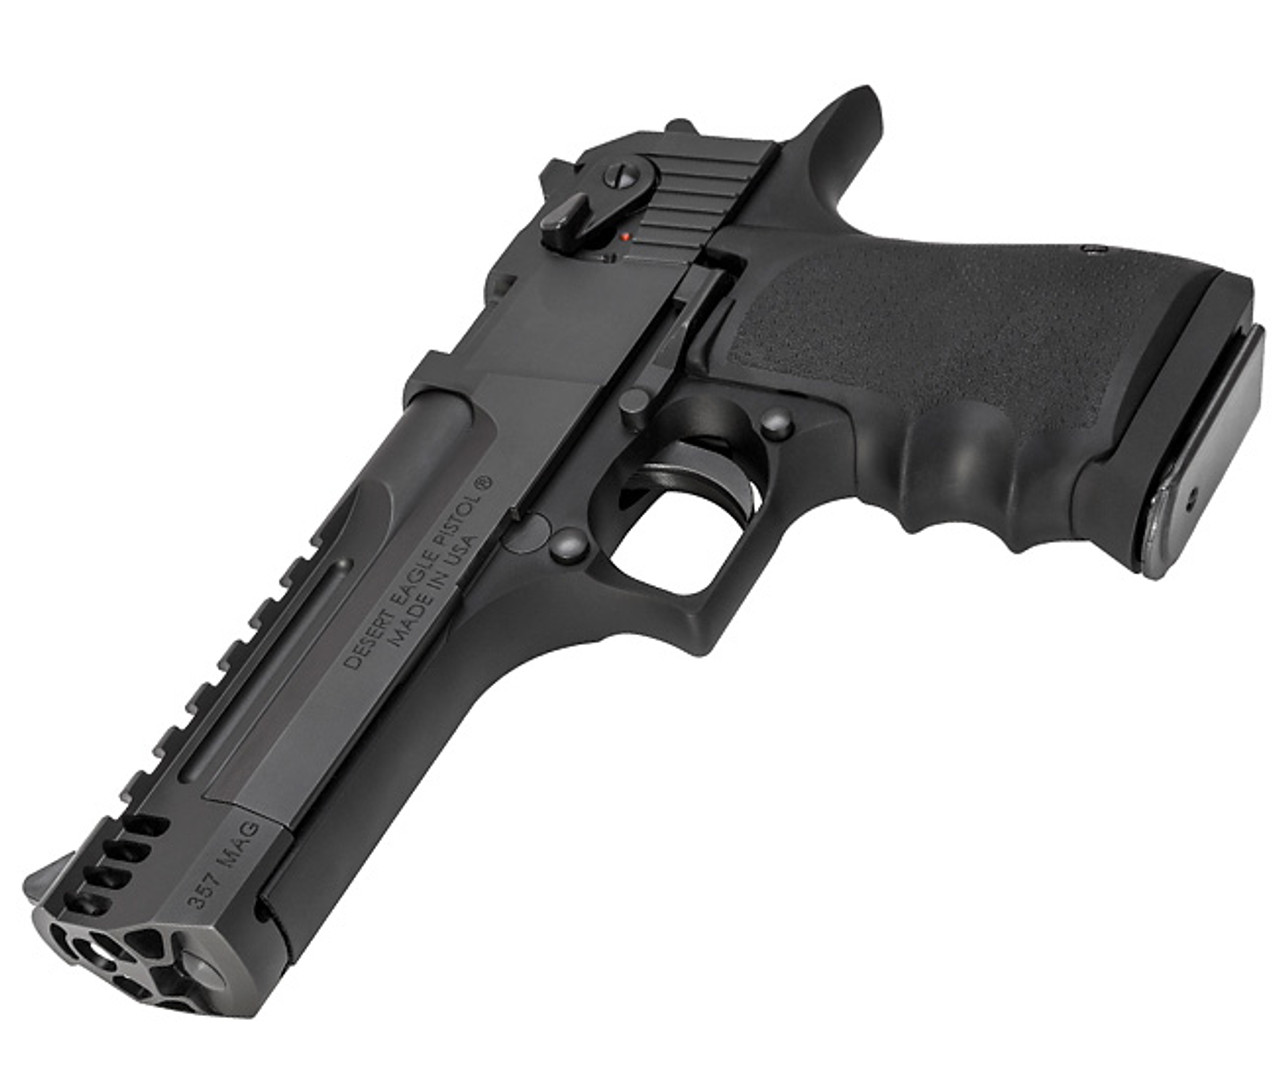 Desert Eagle, .357 Magnum, Case Hardened - Kahr Firearms Group